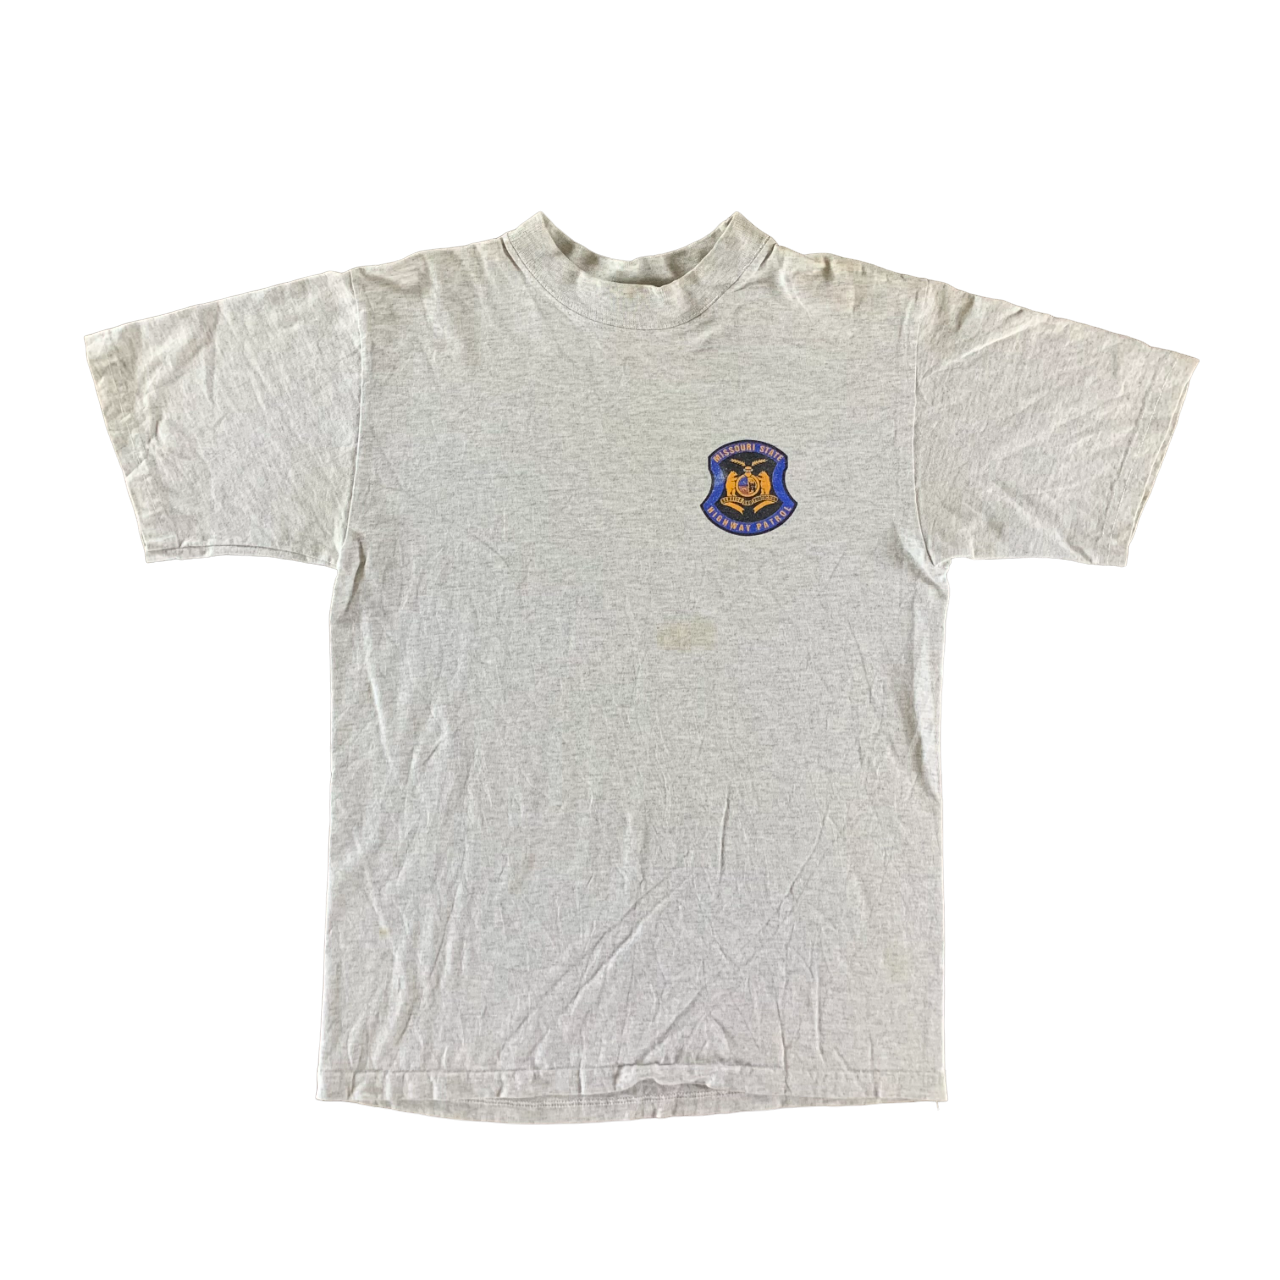 Vintage 1990s Missouri State Highway Patrol T-shirt size Medium